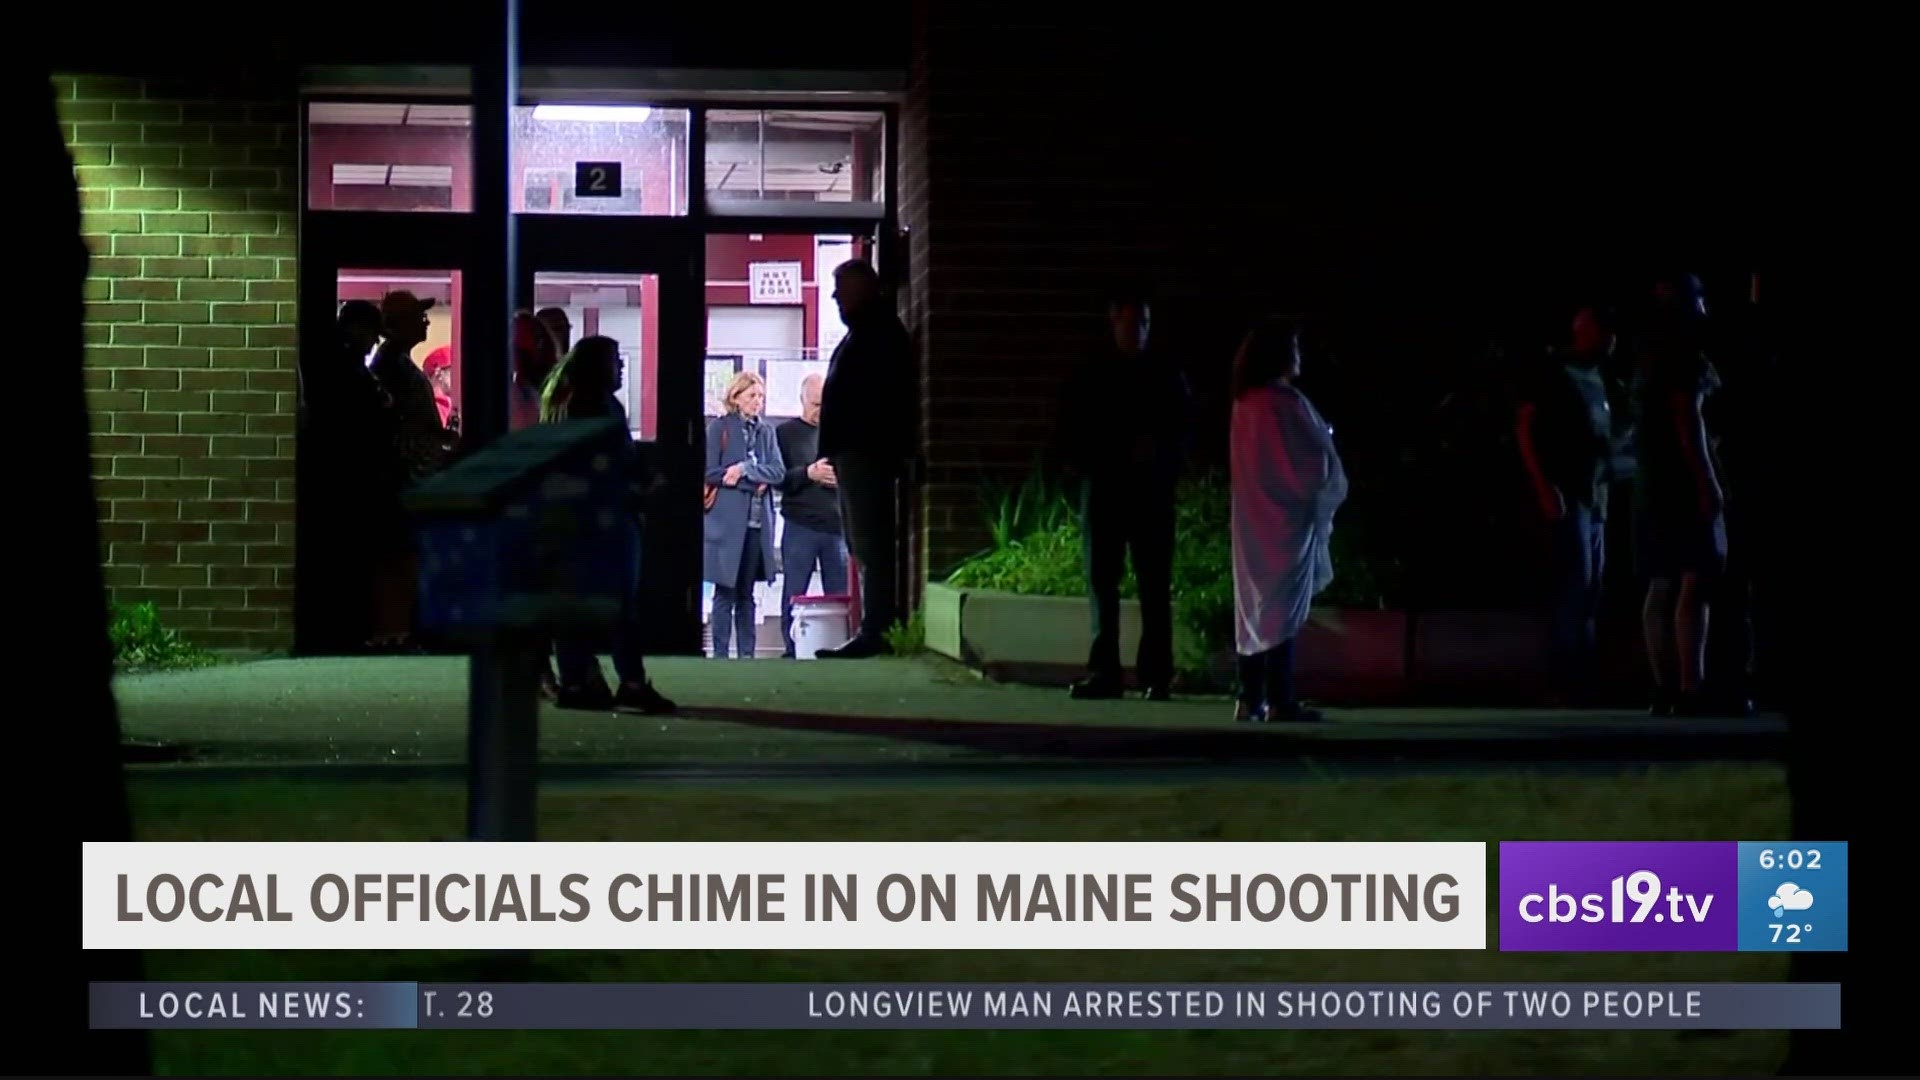 Watch CBS Evening News: Uvalde shooting report released - Full show on CBS